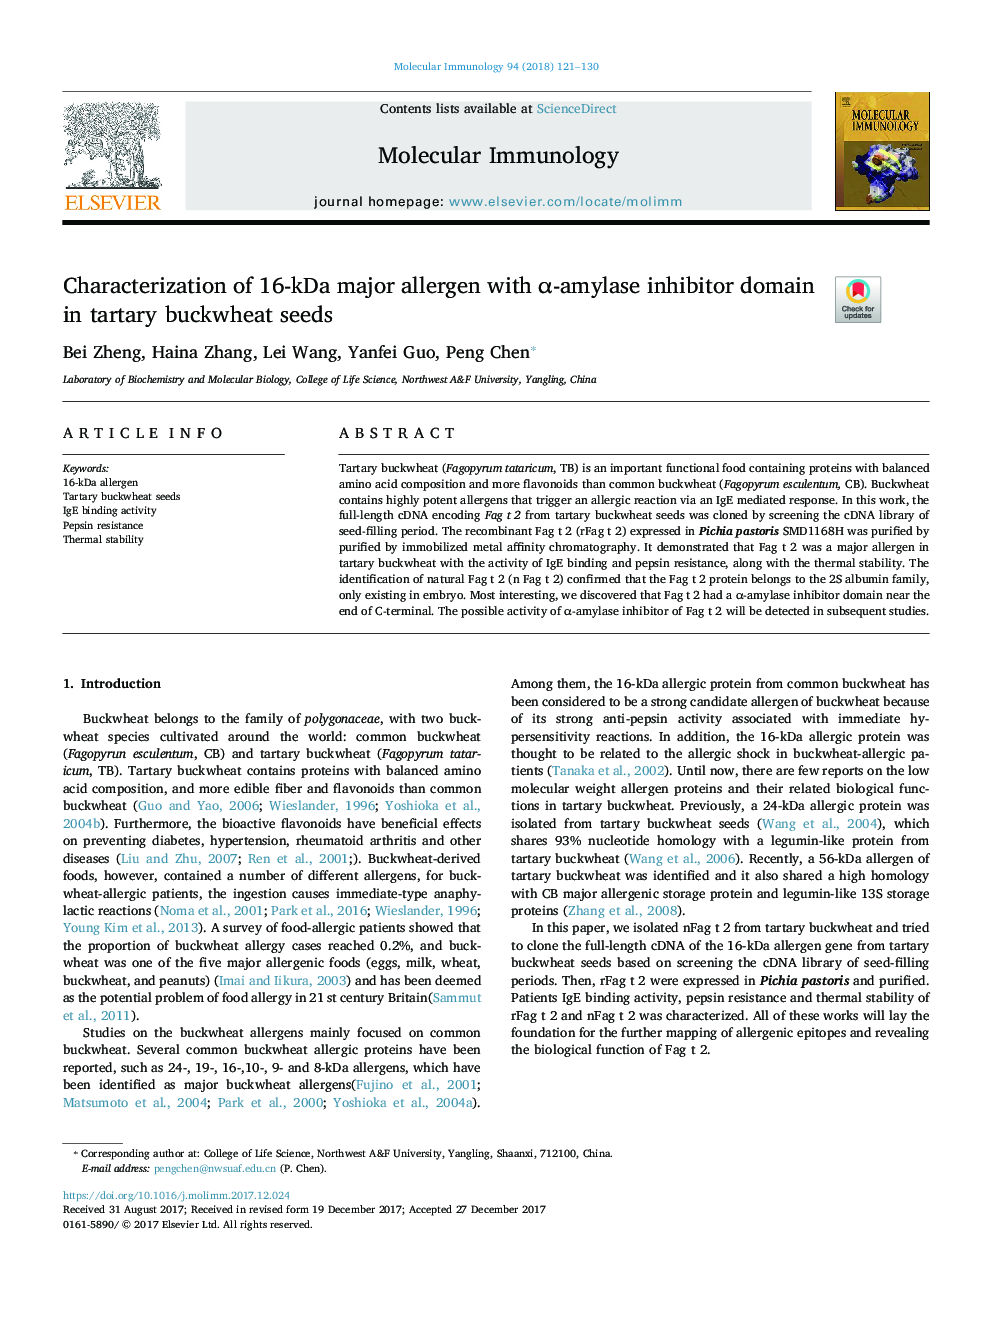 Characterization of 16-kDa major allergen with Î±-amylase inhibitor domain in tartary buckwheat seeds